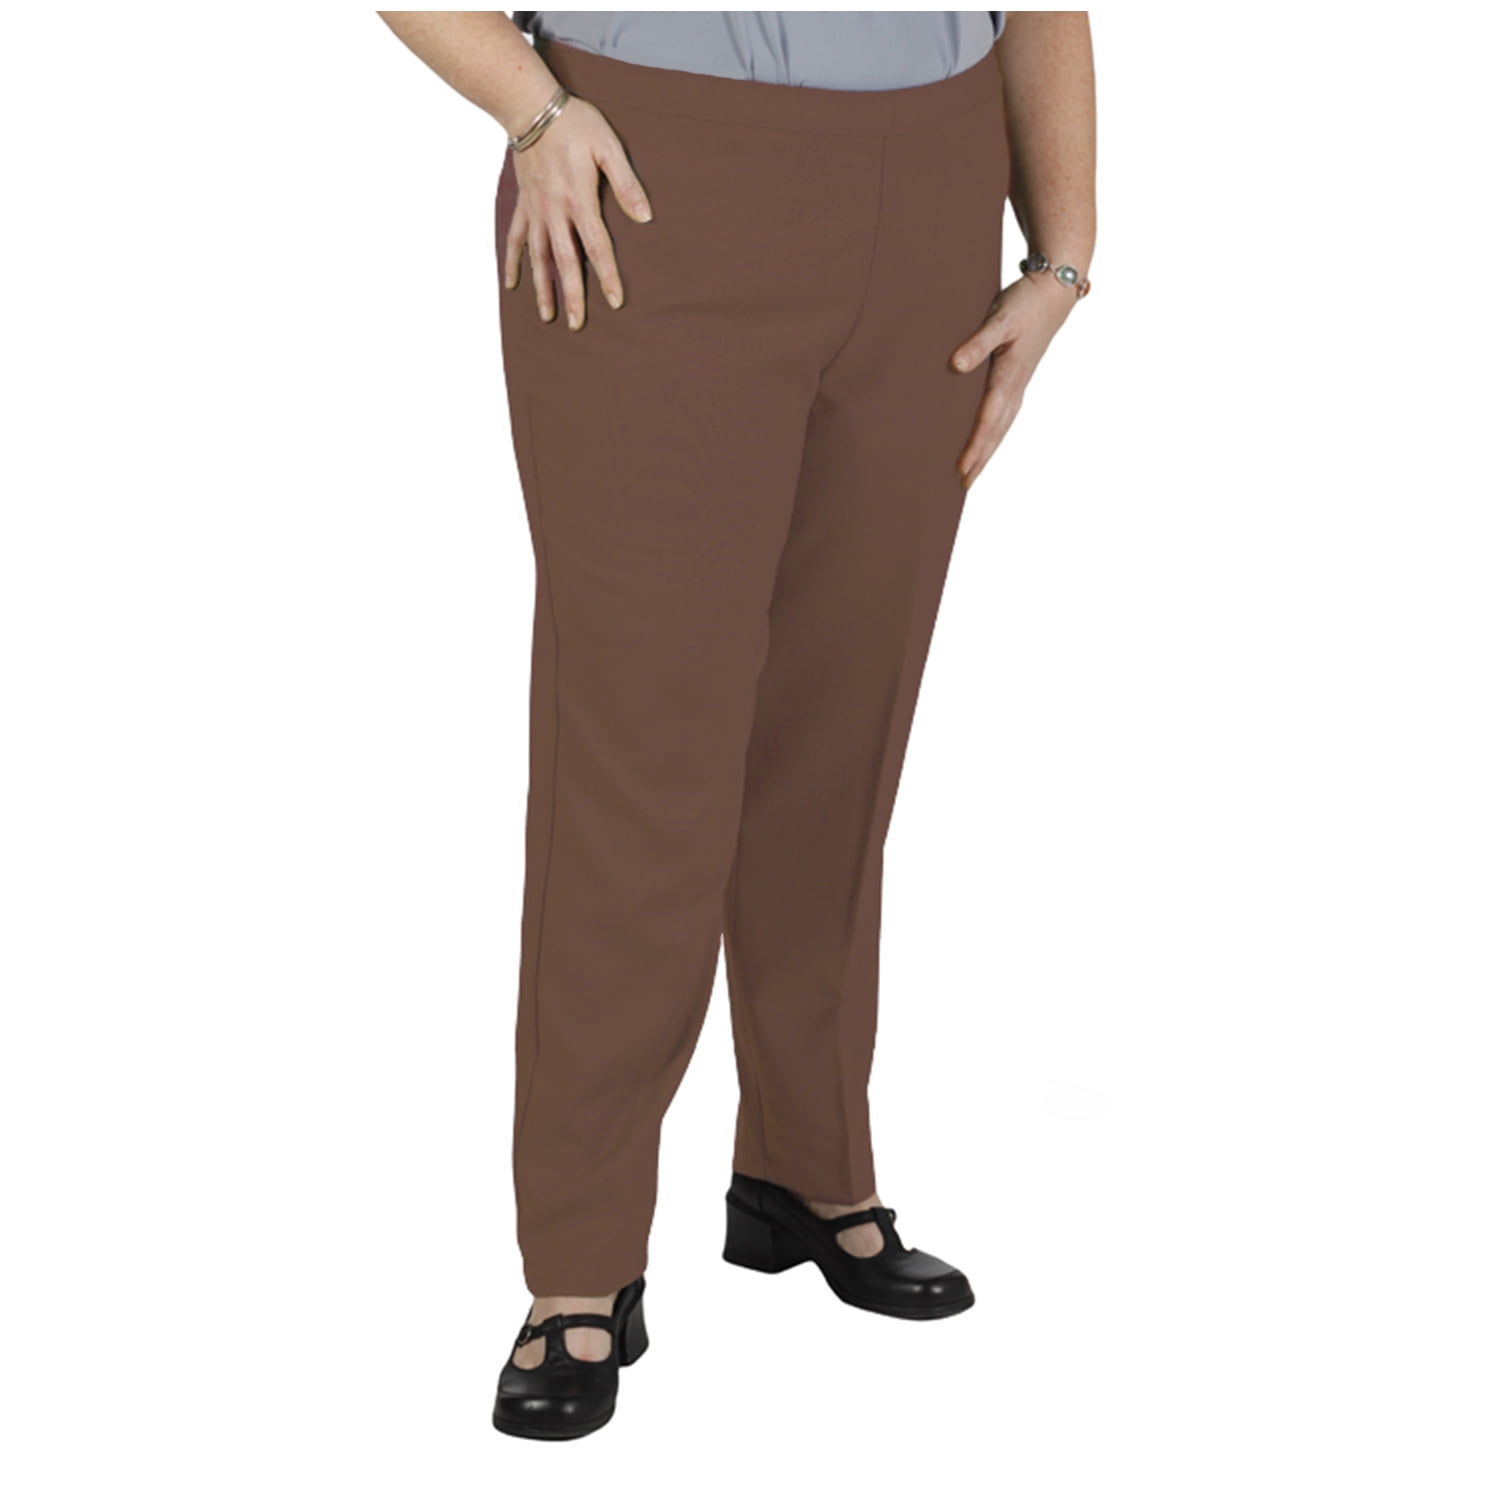 Women's Plus Size Chestnut Bend Over® Pull-On Pants - 16WP - Walmart.com